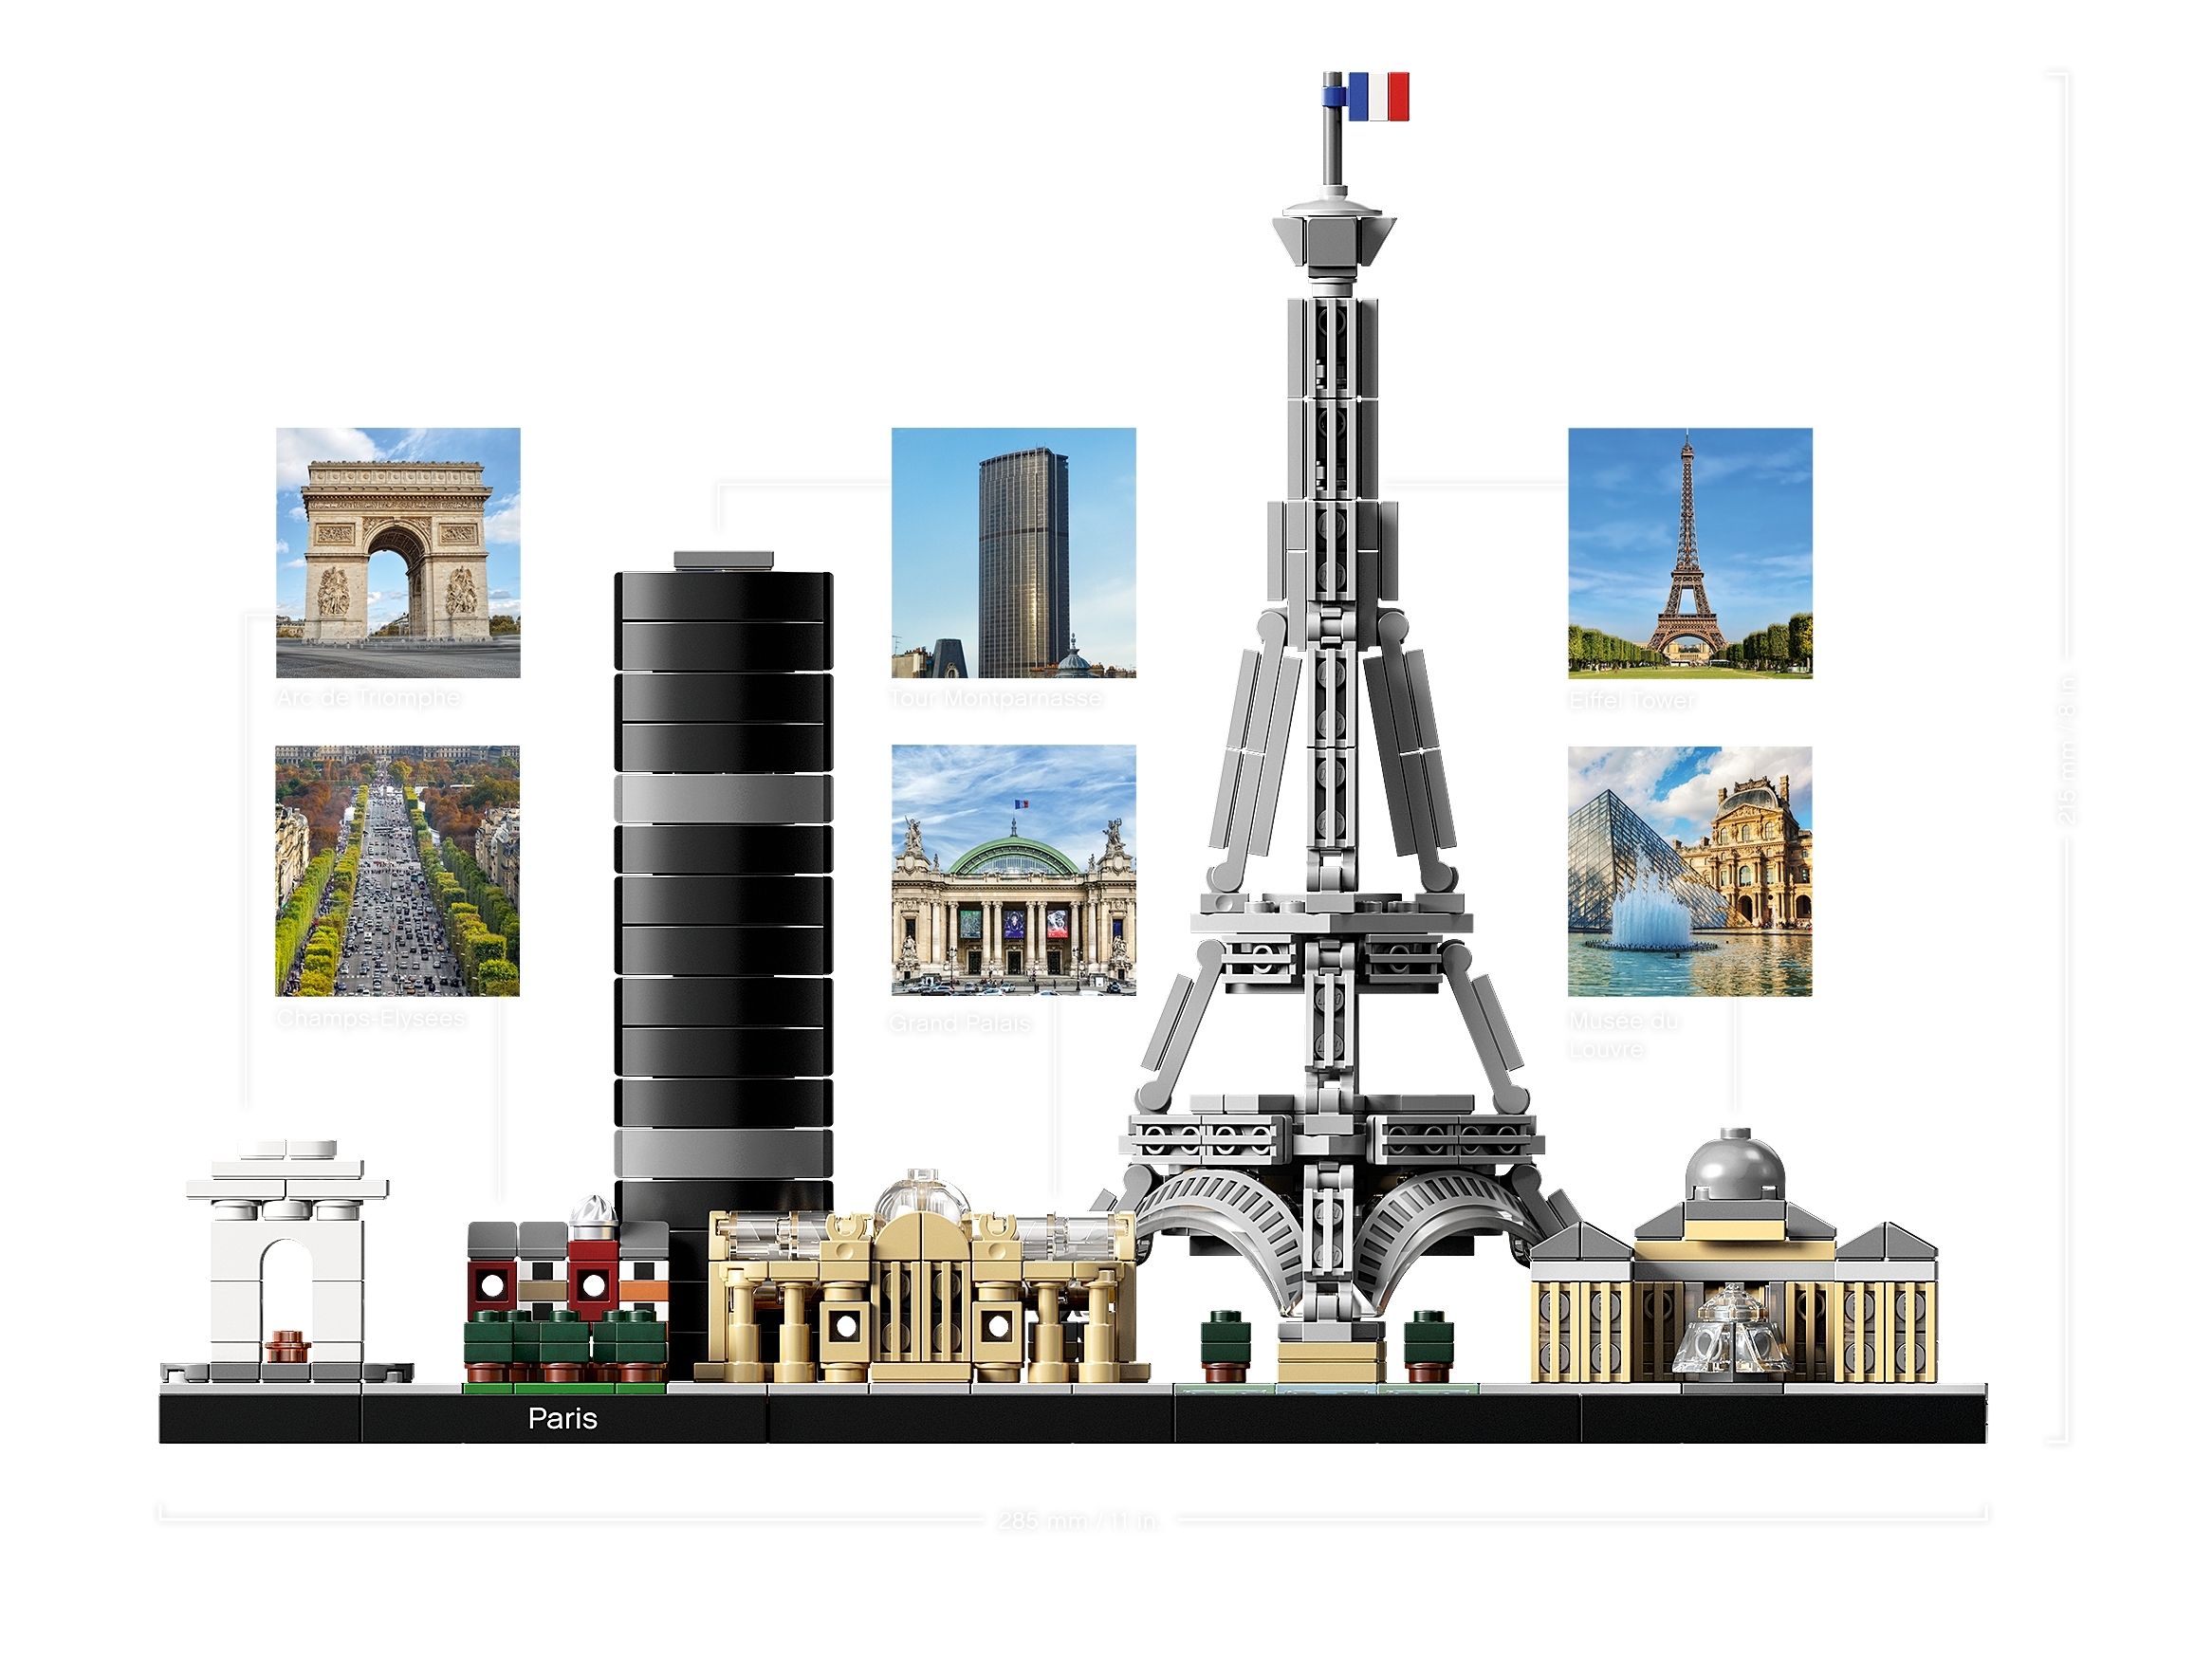 21044 LEGO Architecture Paris Skyline Model 649 Pieces Age 12 New Release 2019! 